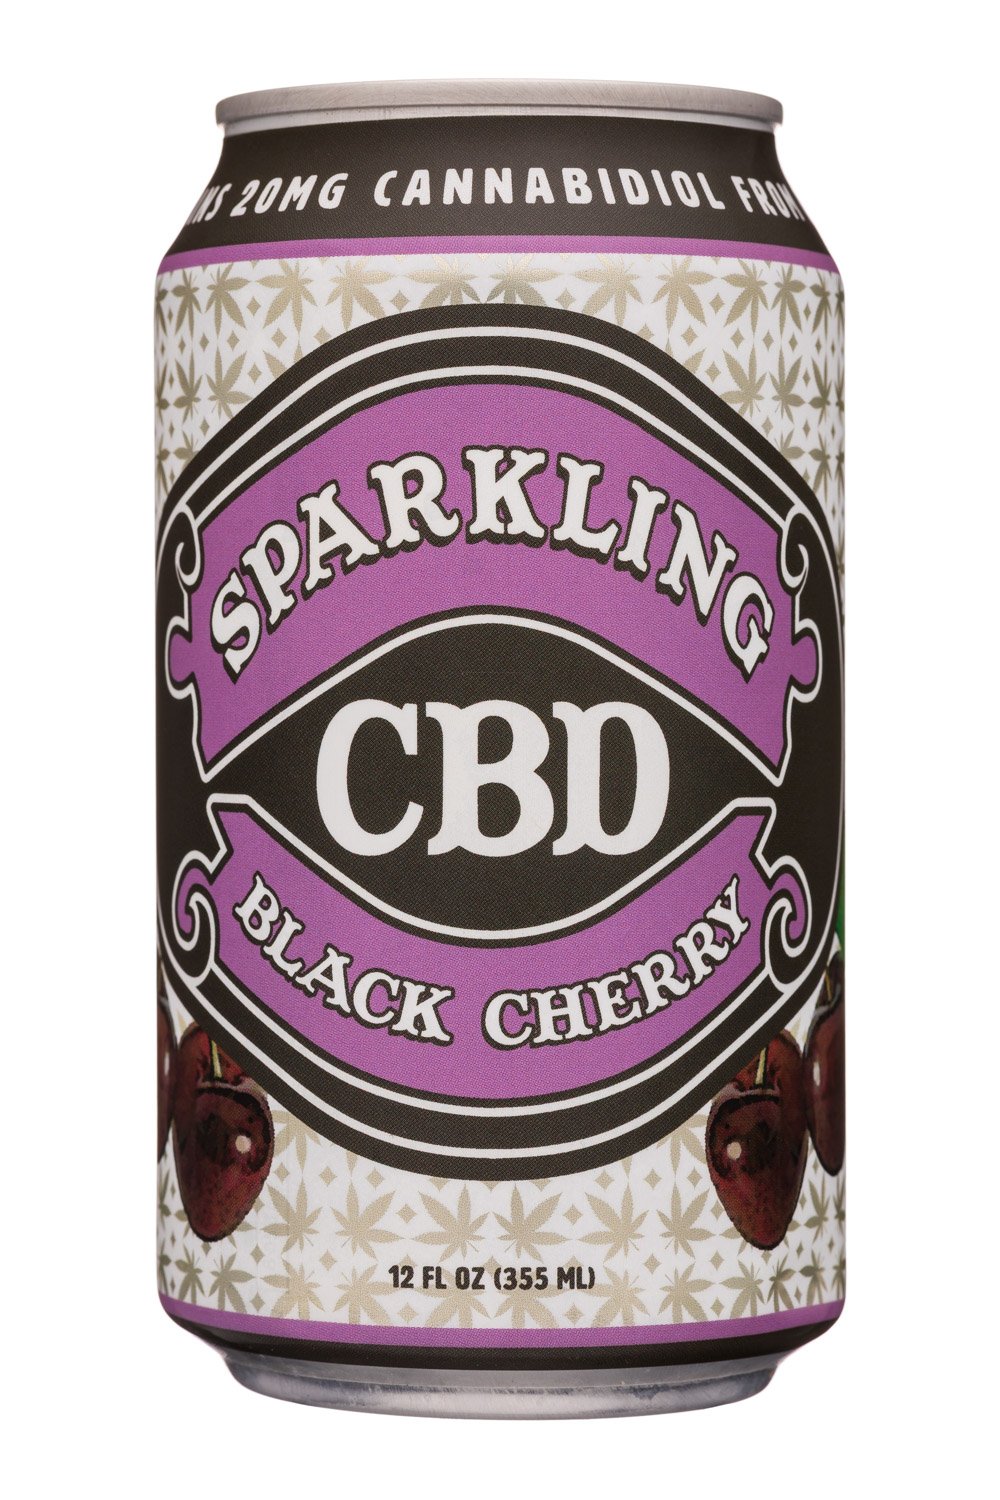 Sparkling Cbd Black Cherry